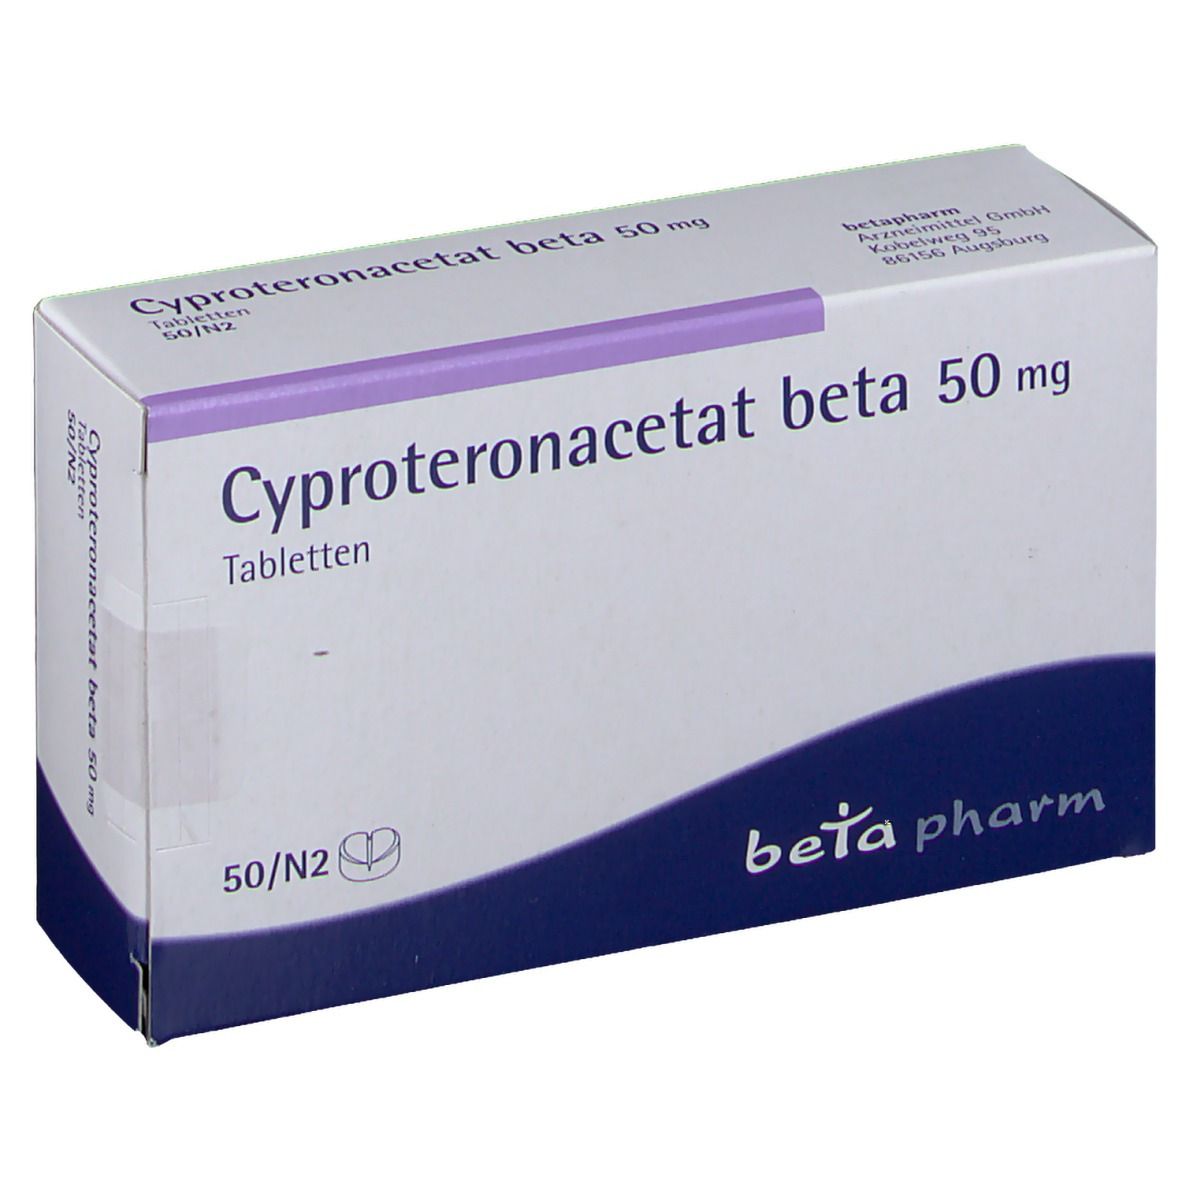 Cyproteronacetat beta 50 mg